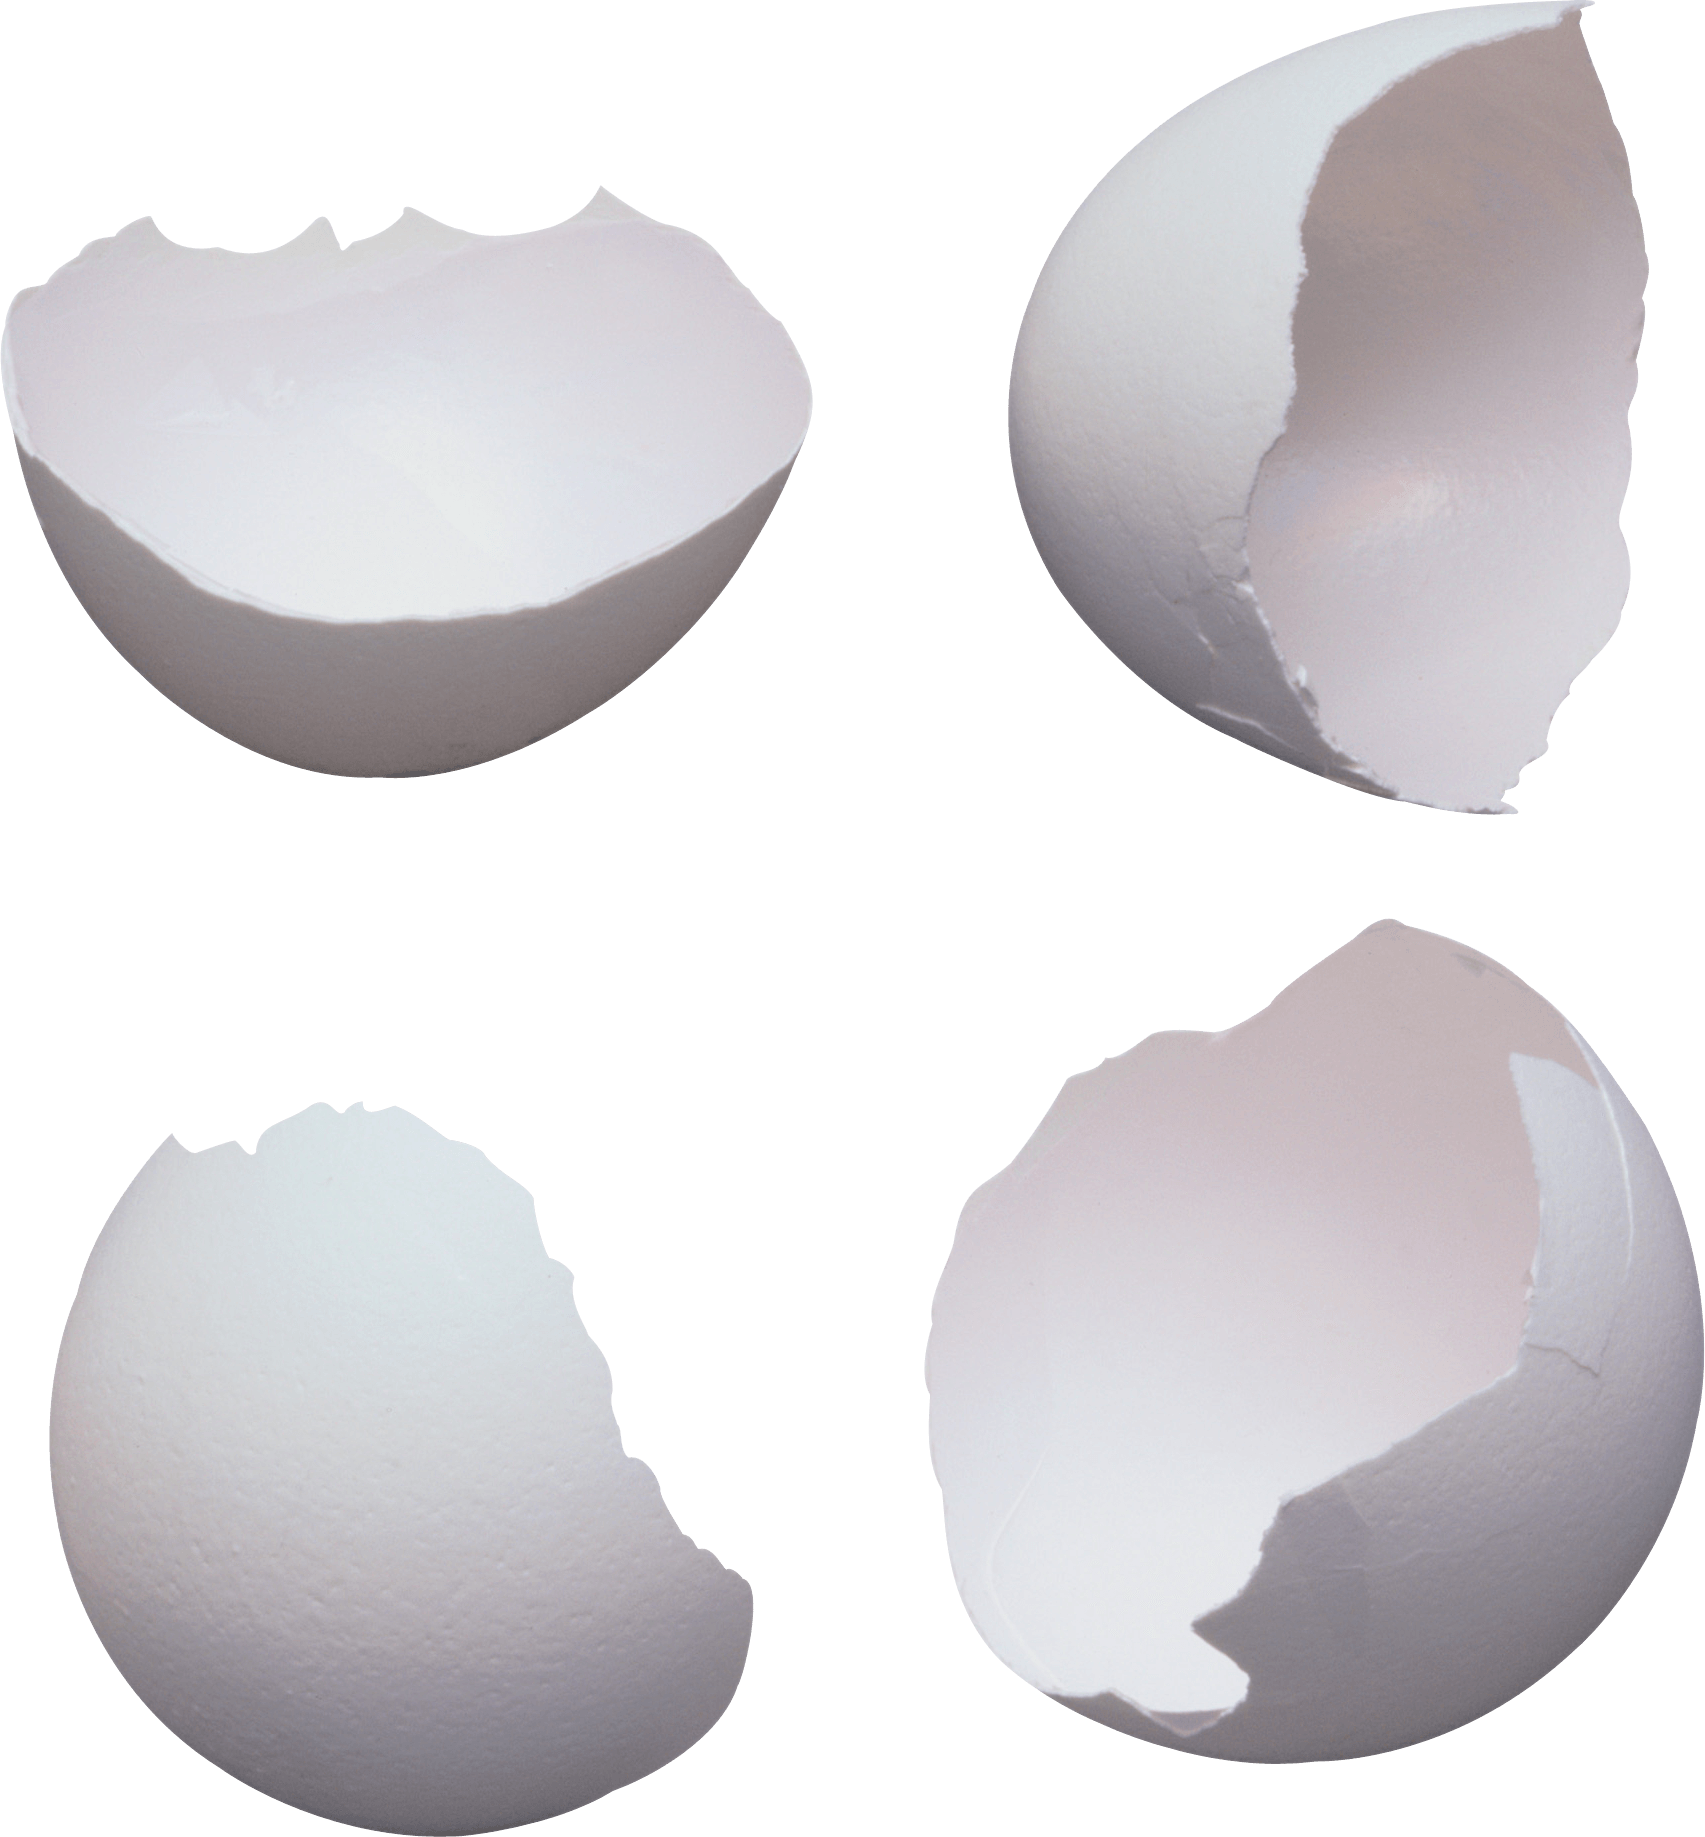 Cracked Egg Png Image PNG Image